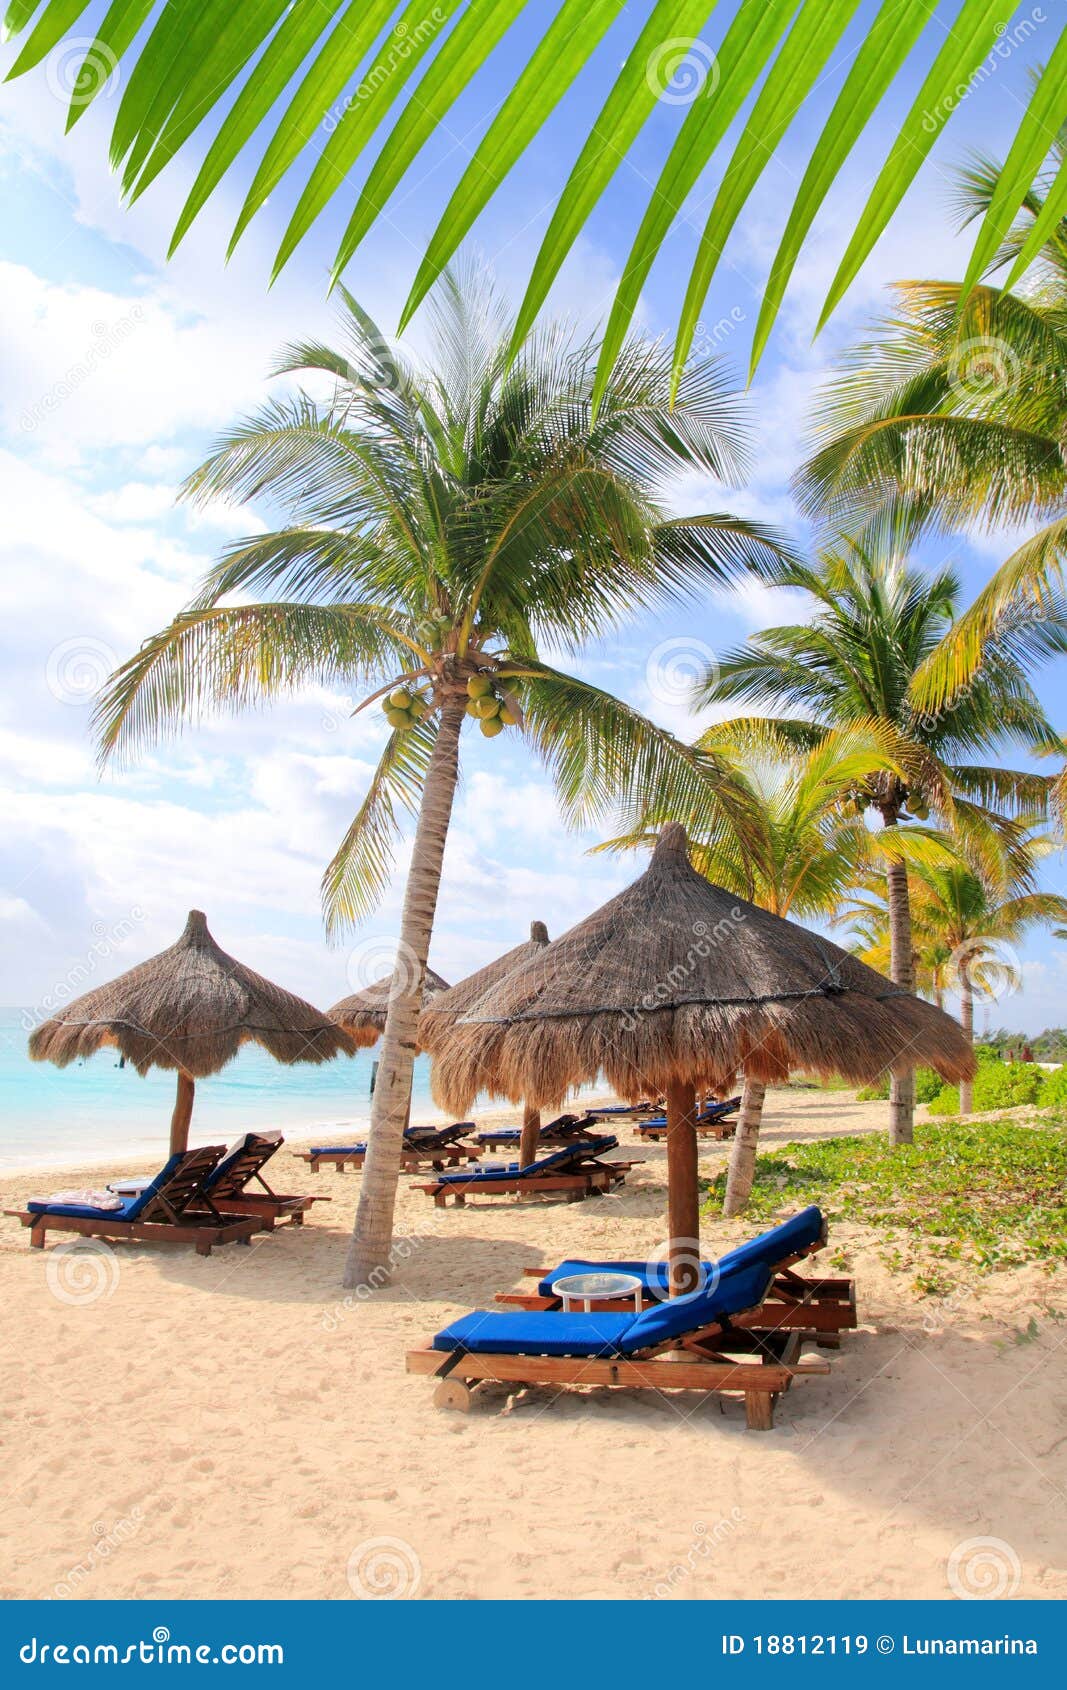 mayan riviera beach palm trees sunroof caribbean